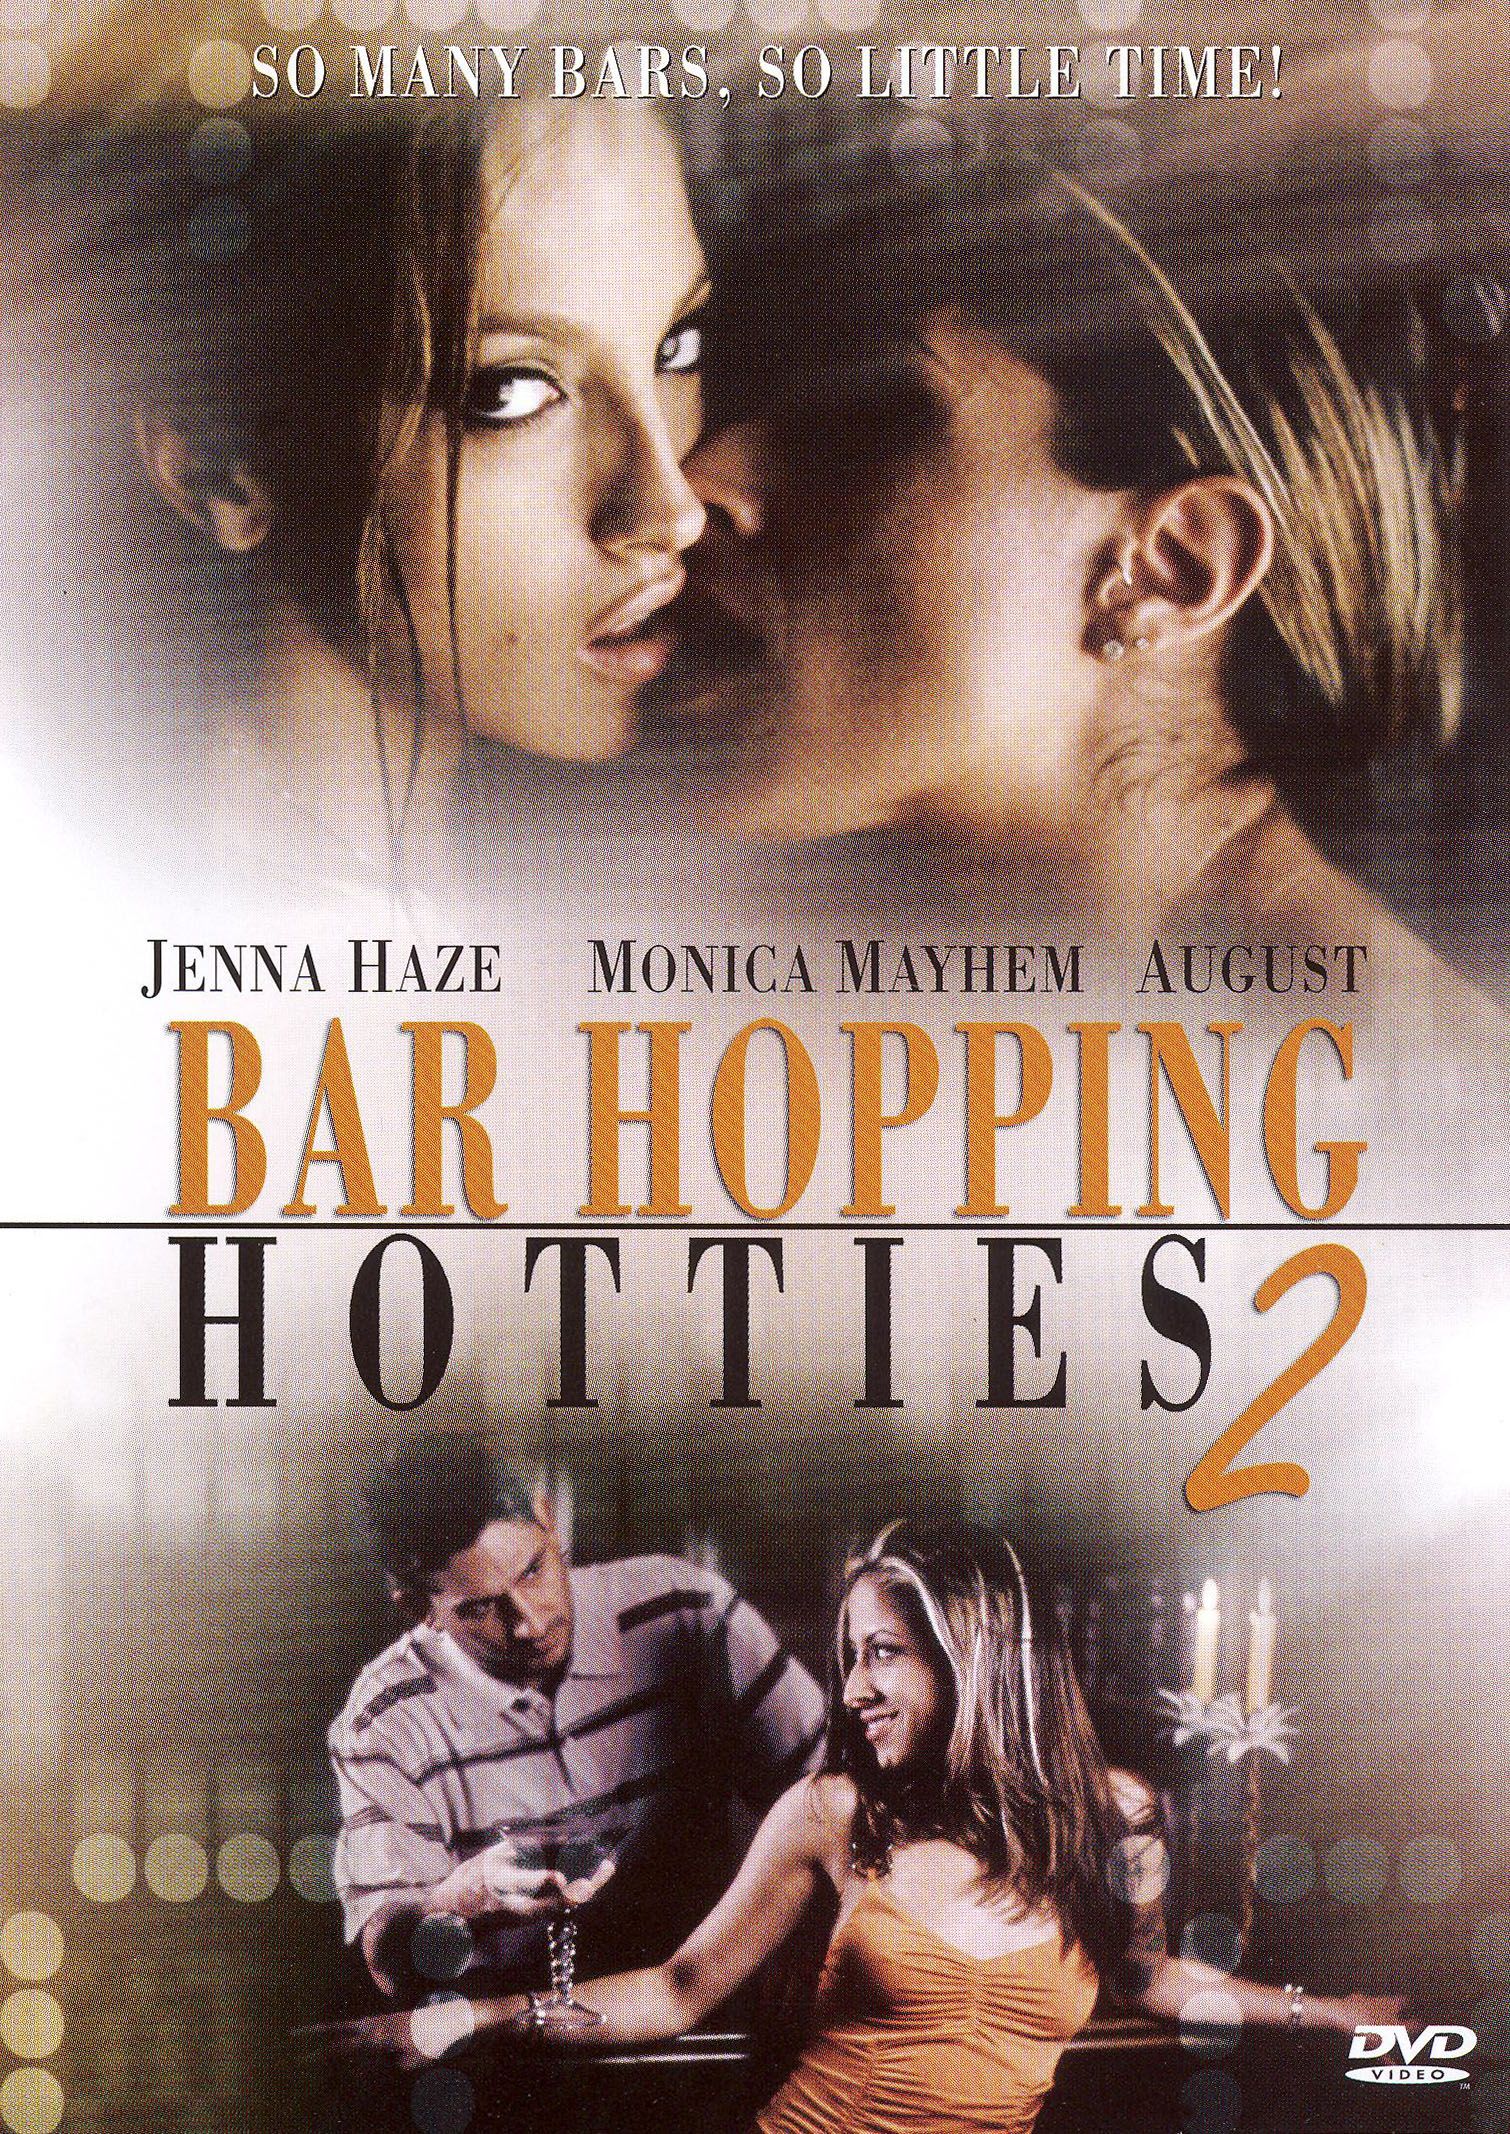 Bar Hopping Hotties 2 (2006) Screenshot 1